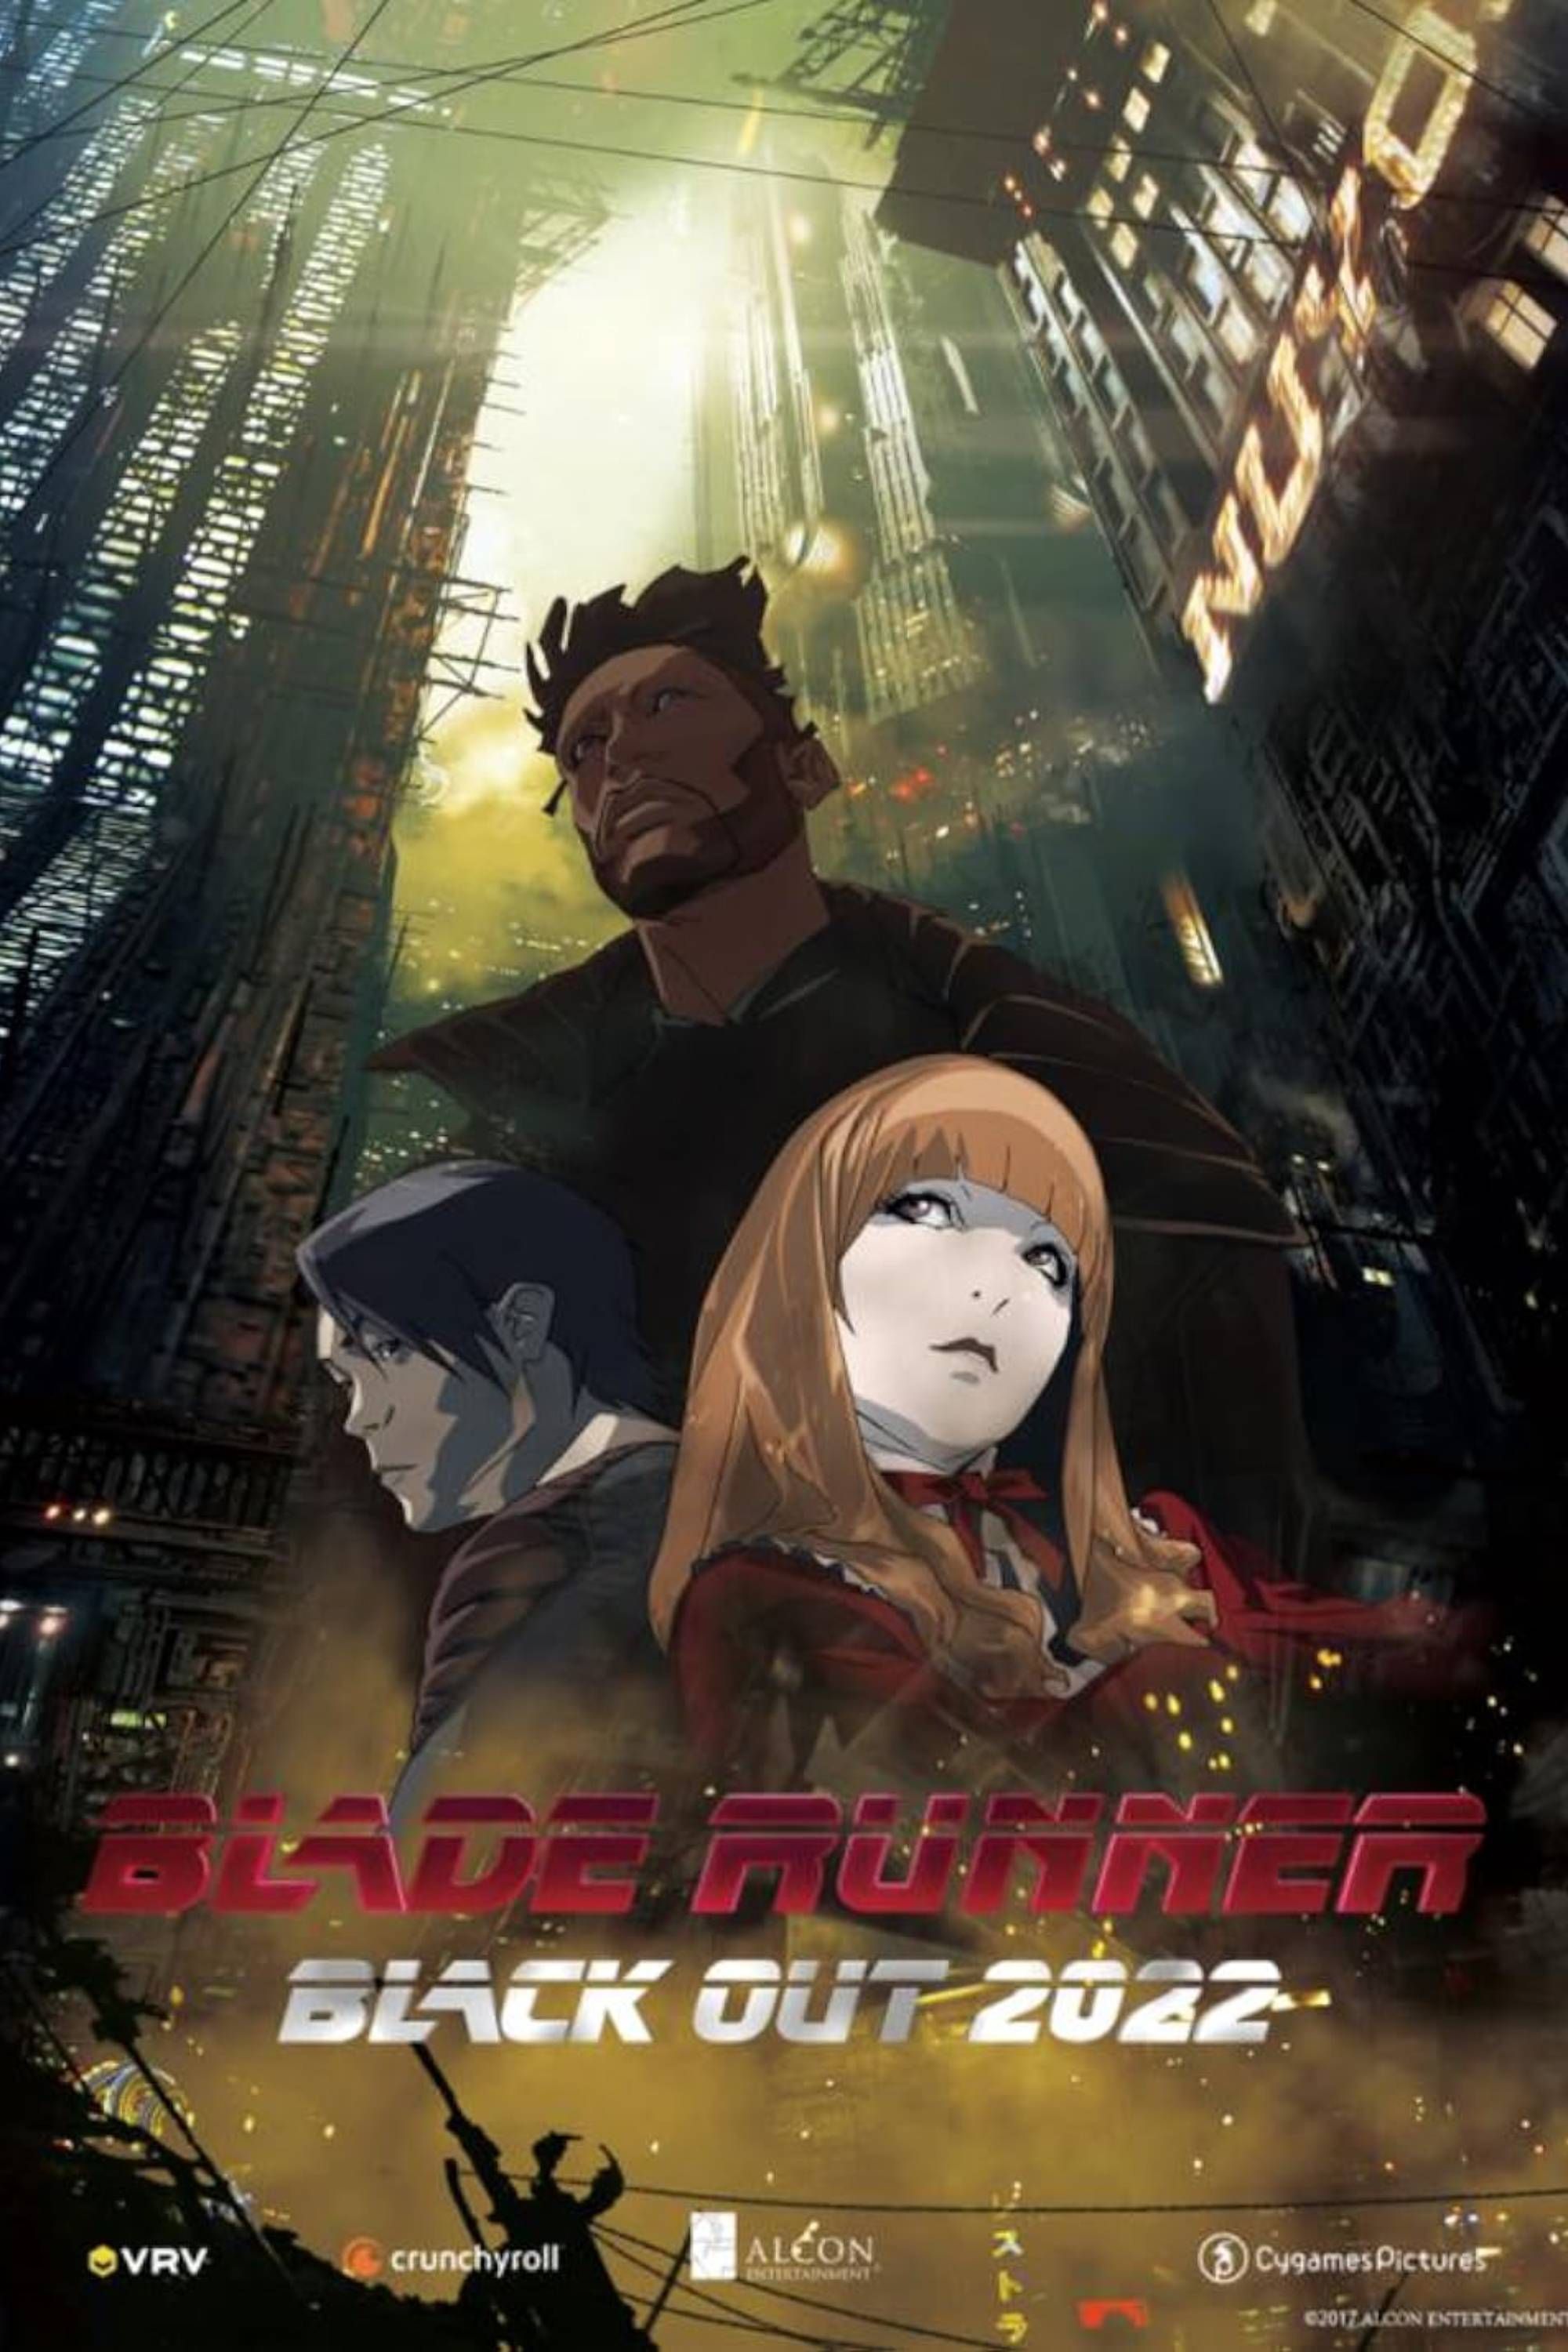 Blade Runner Black Out 2022 (2017) - Poster